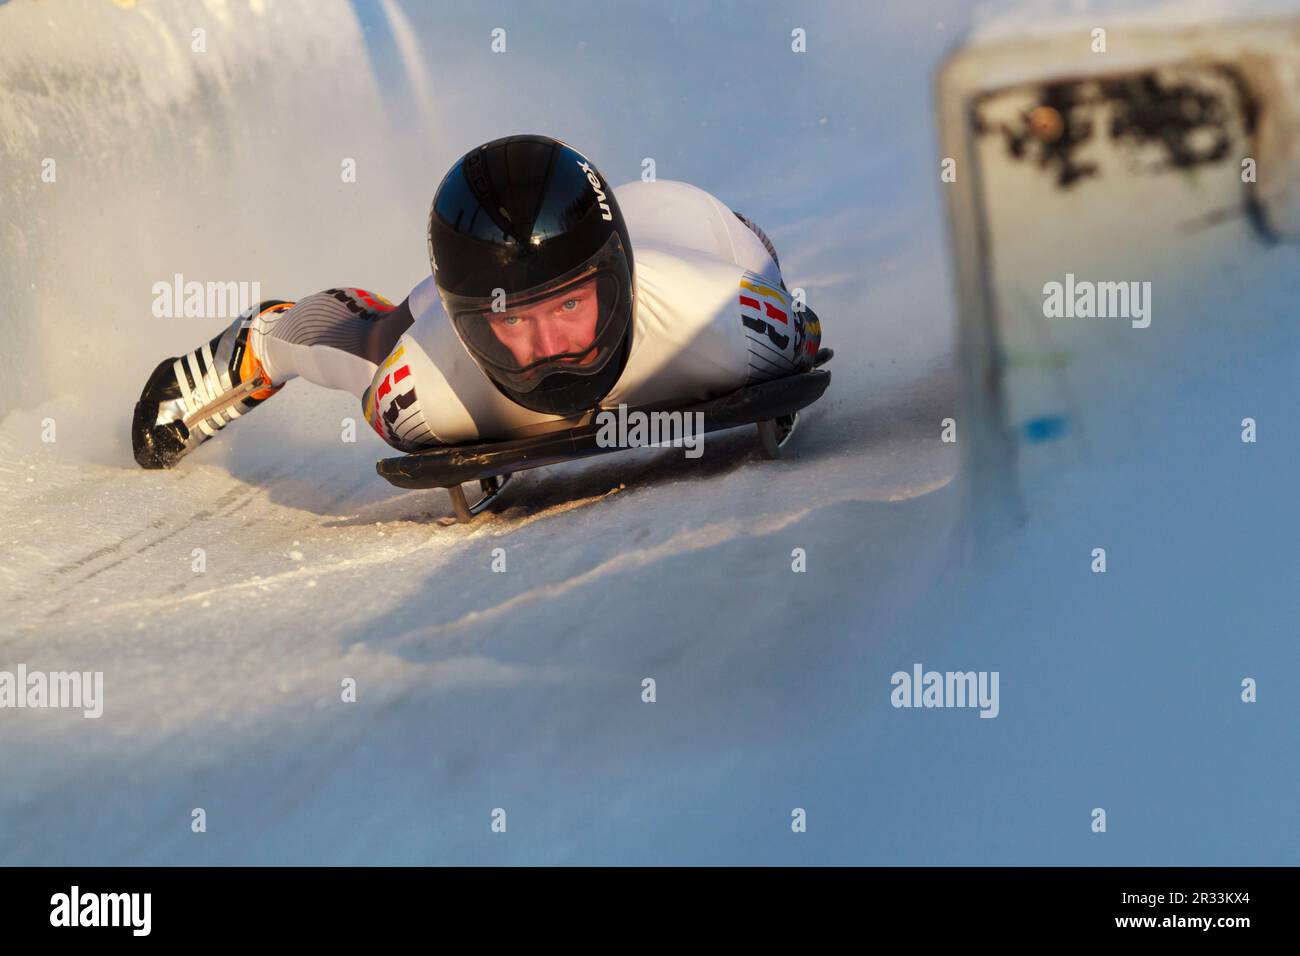 Skelton rider in Innsbruck ice channel Stock Photo